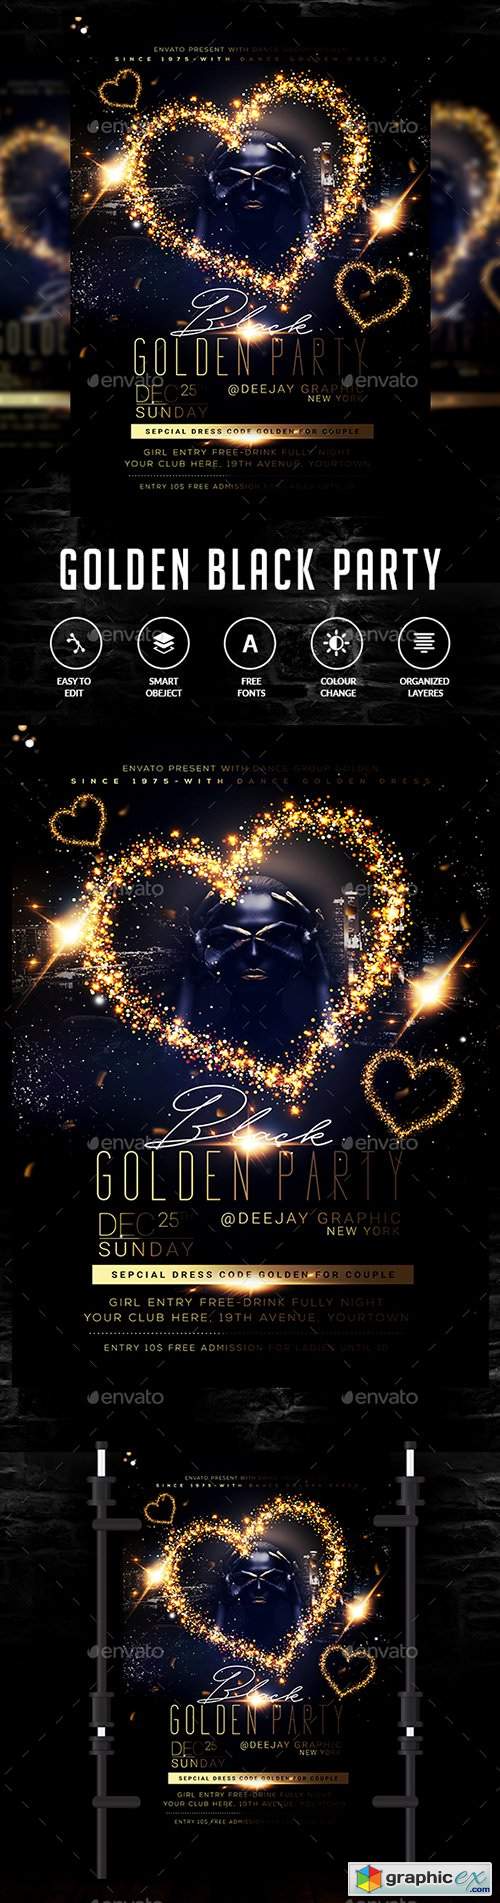 Golden Black Party Flyer